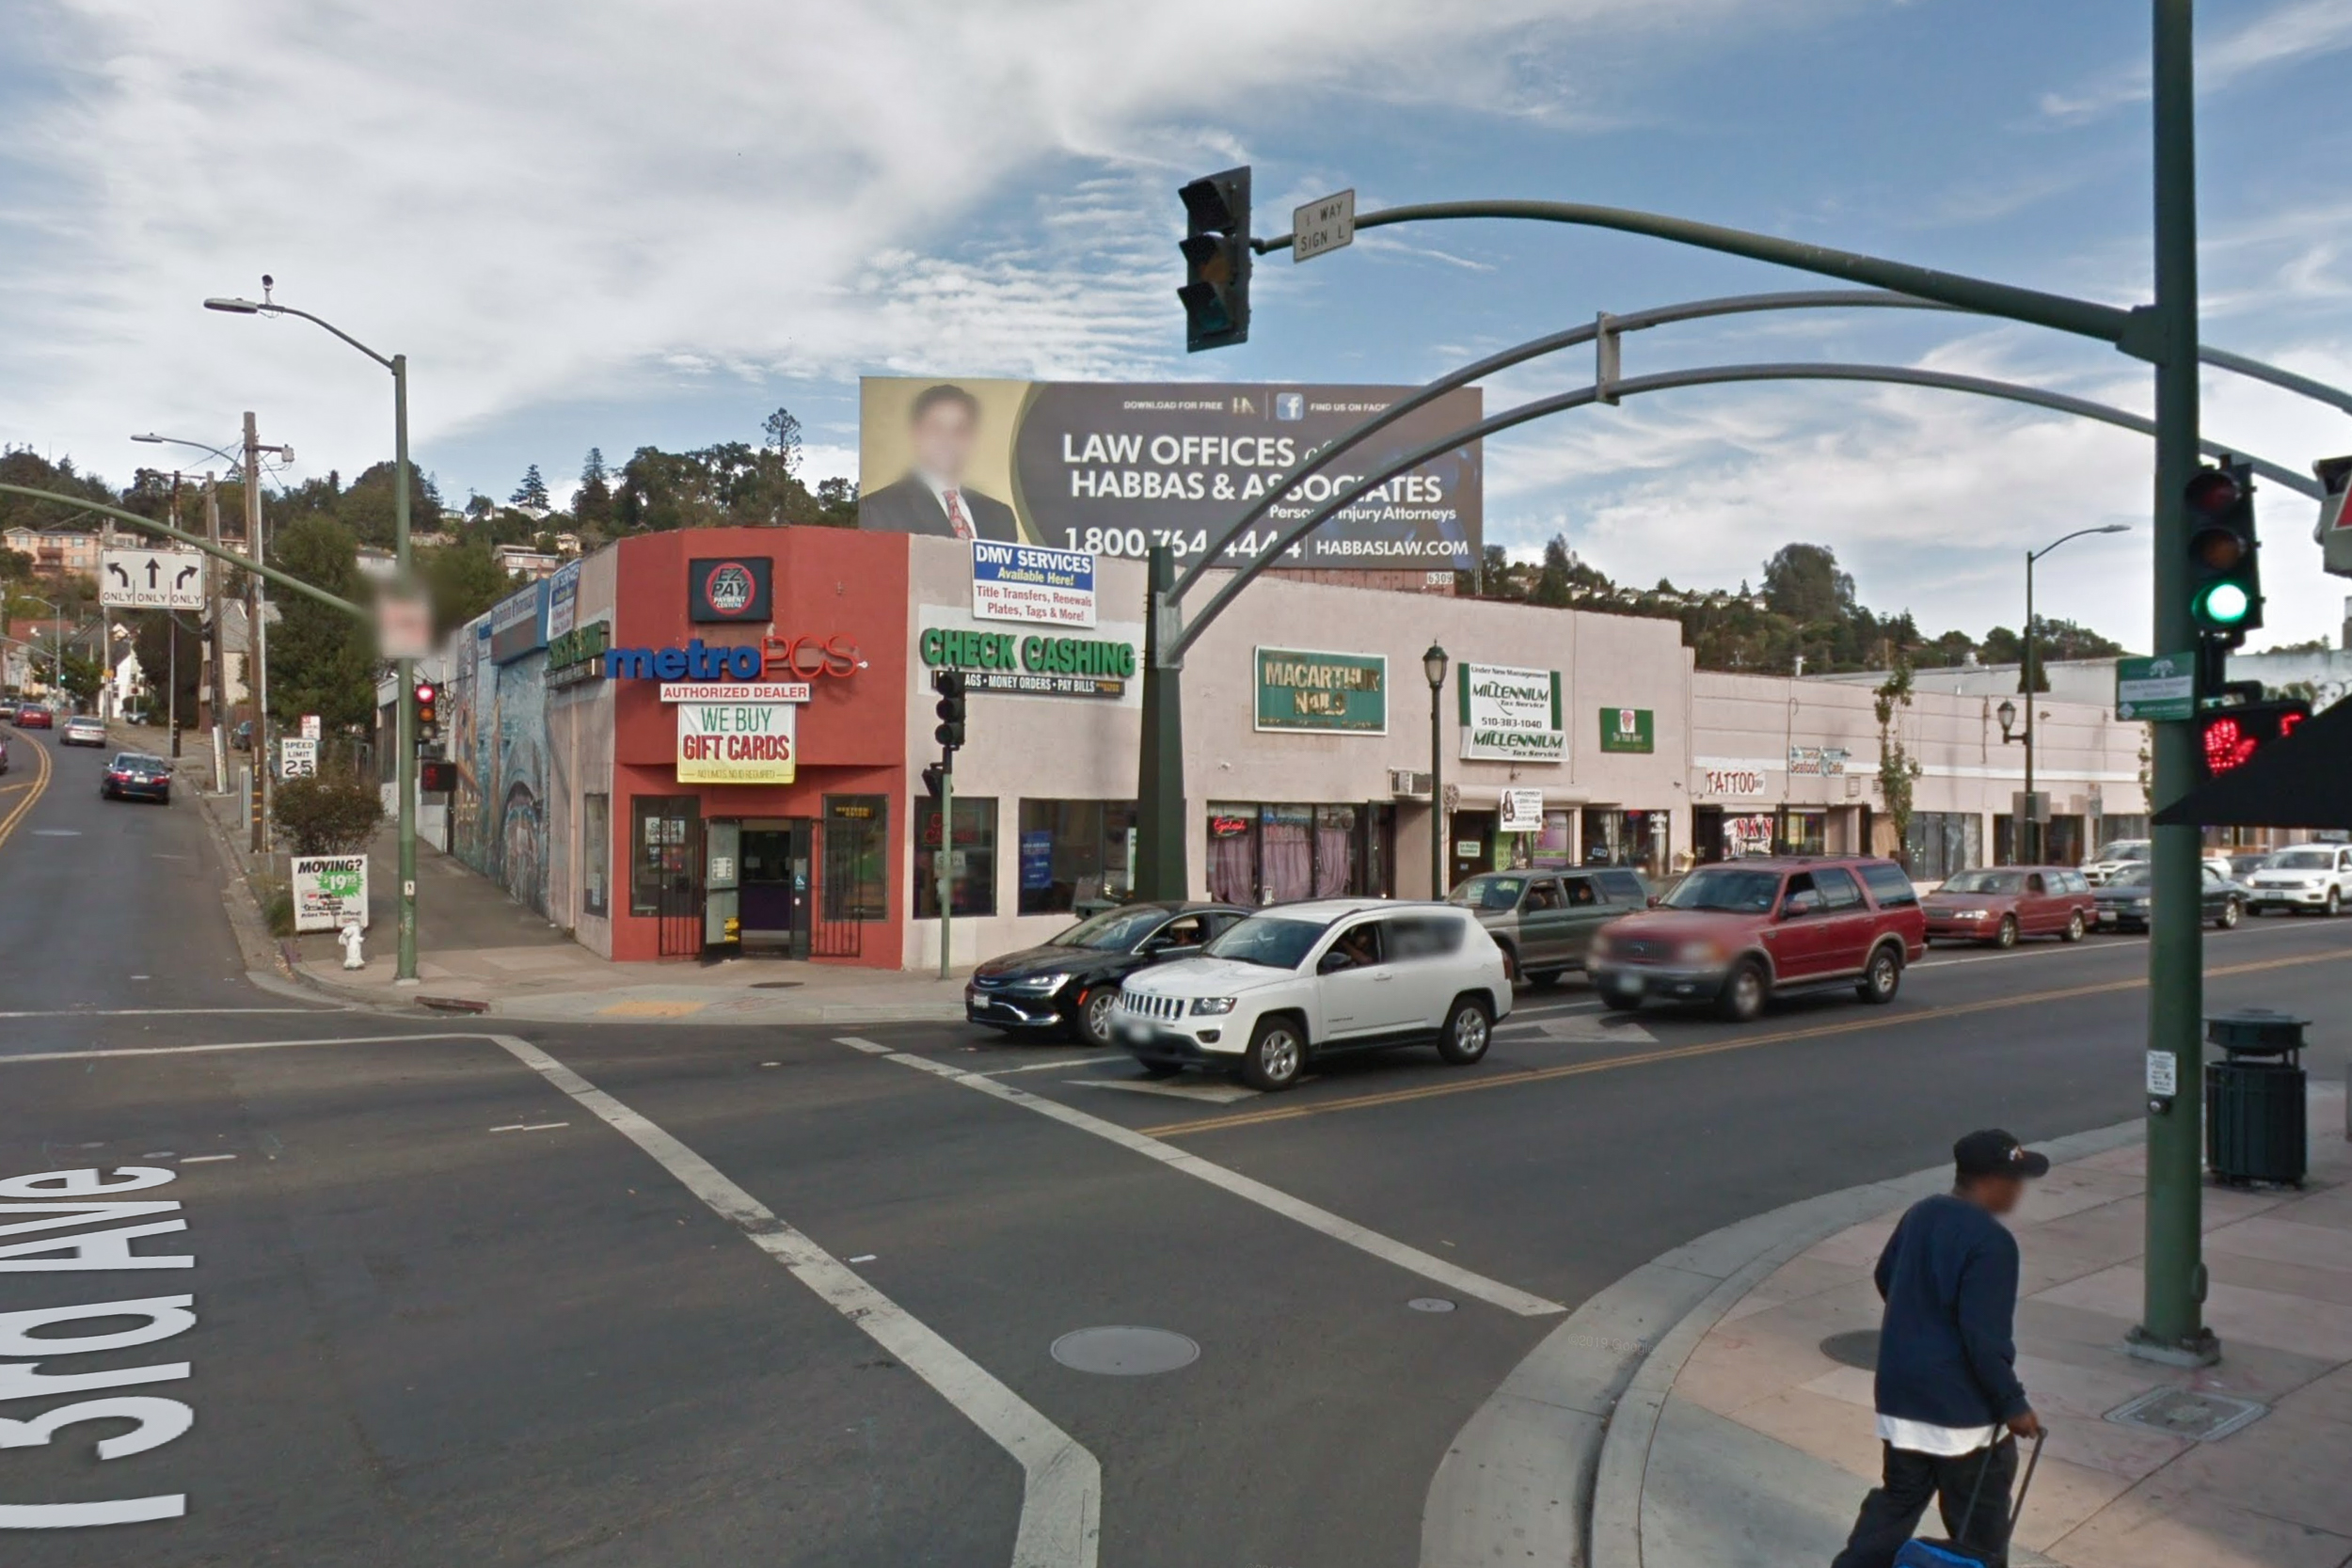 7300 MacArthur Boulevard pre-fire, image via Google Street View circa 2015